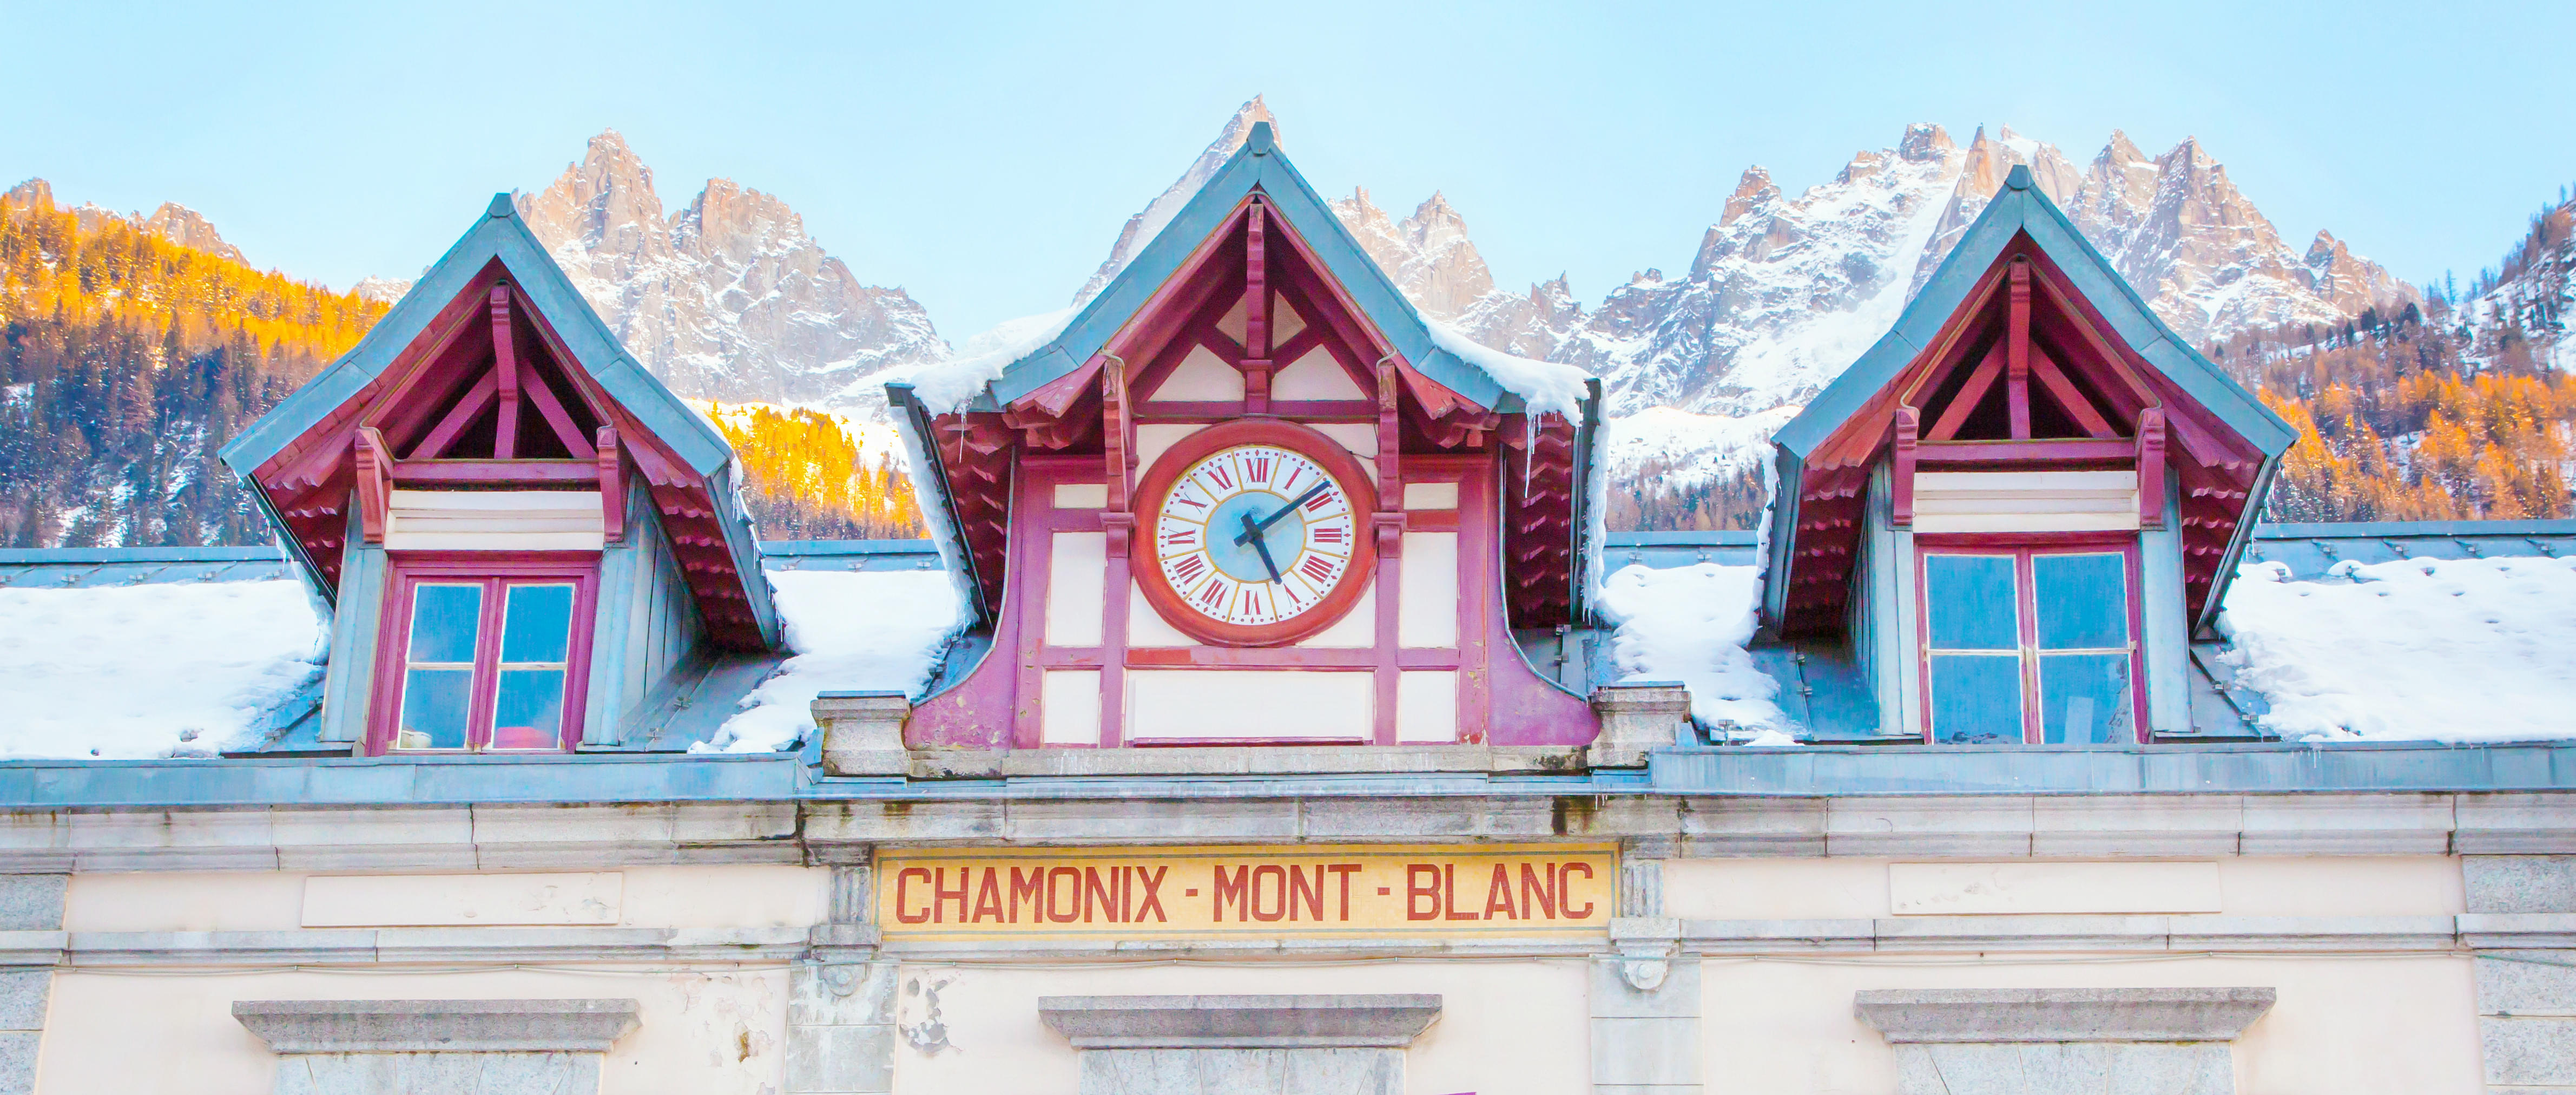 Chamonix Mont Blanc Day Trip from Geneva